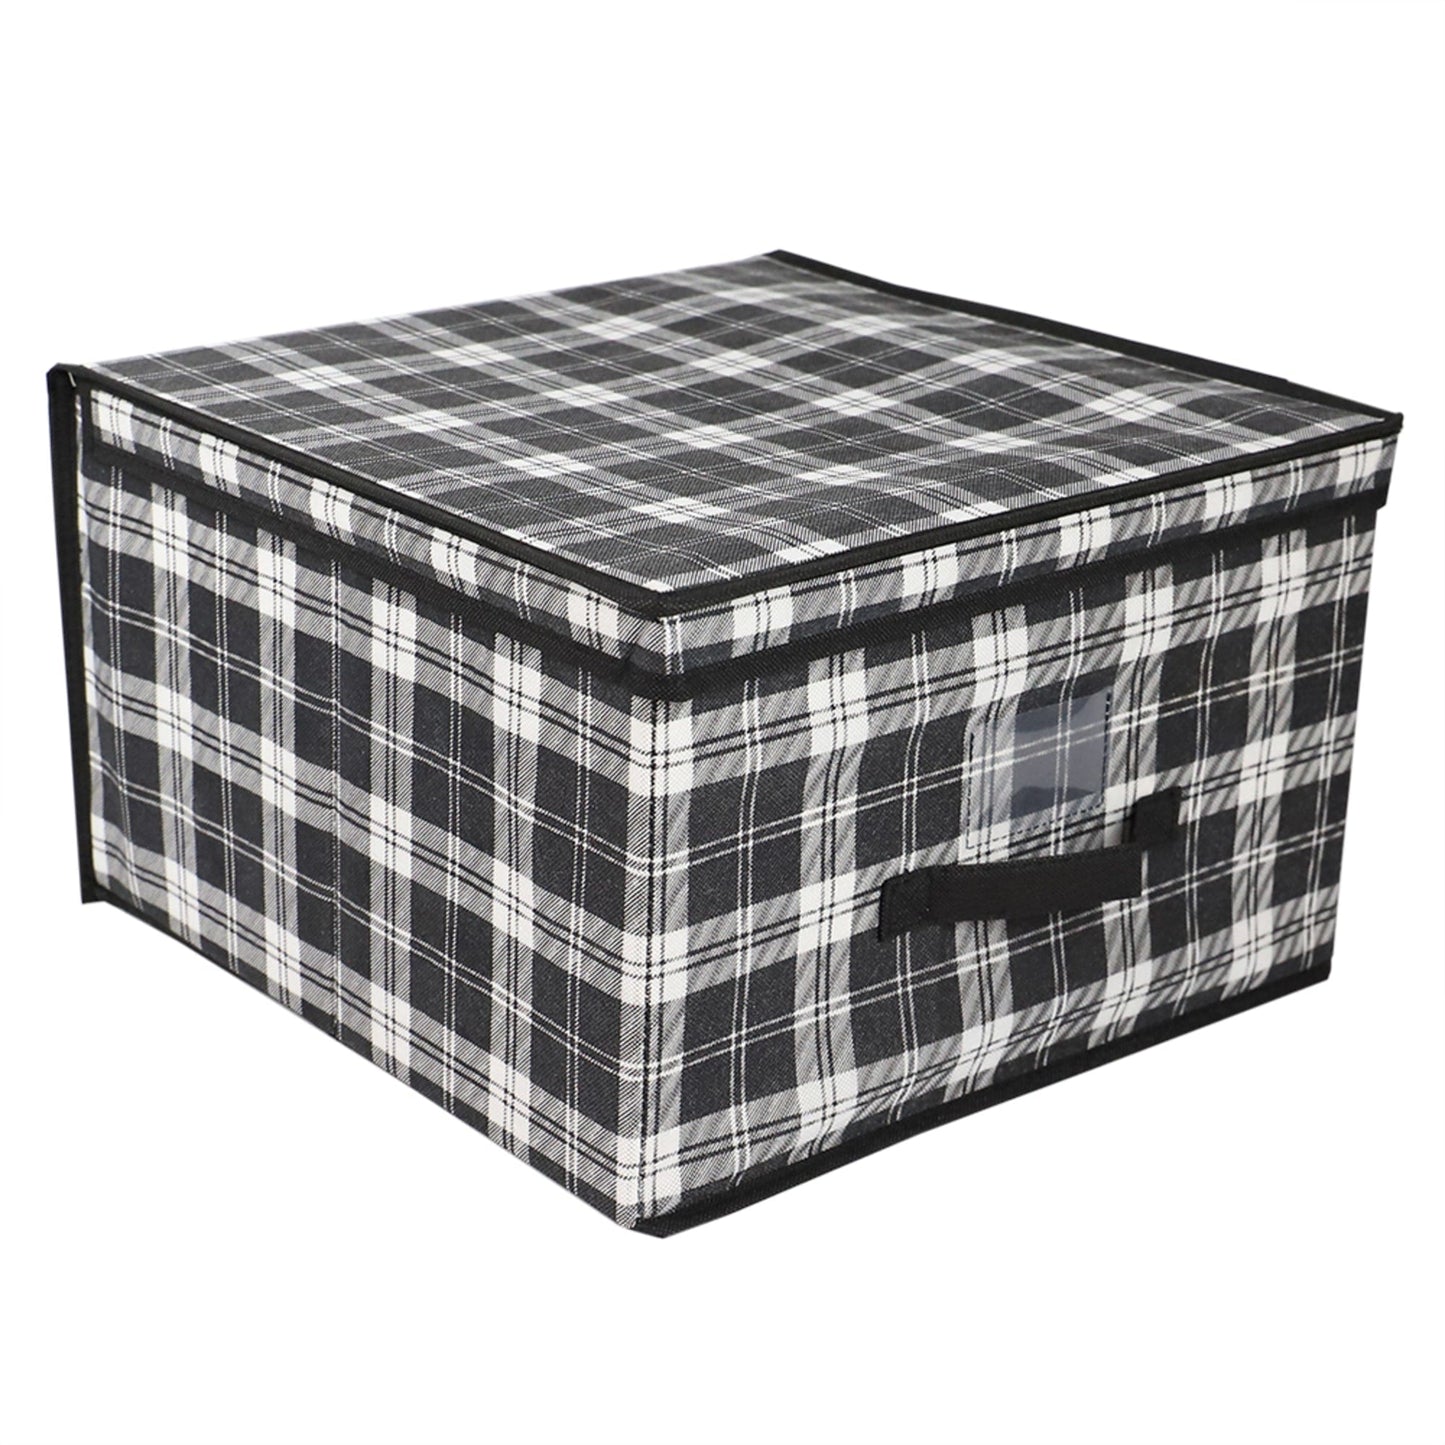 Plaid Non-Woven Jumbo Storage Box with Label Window, Black